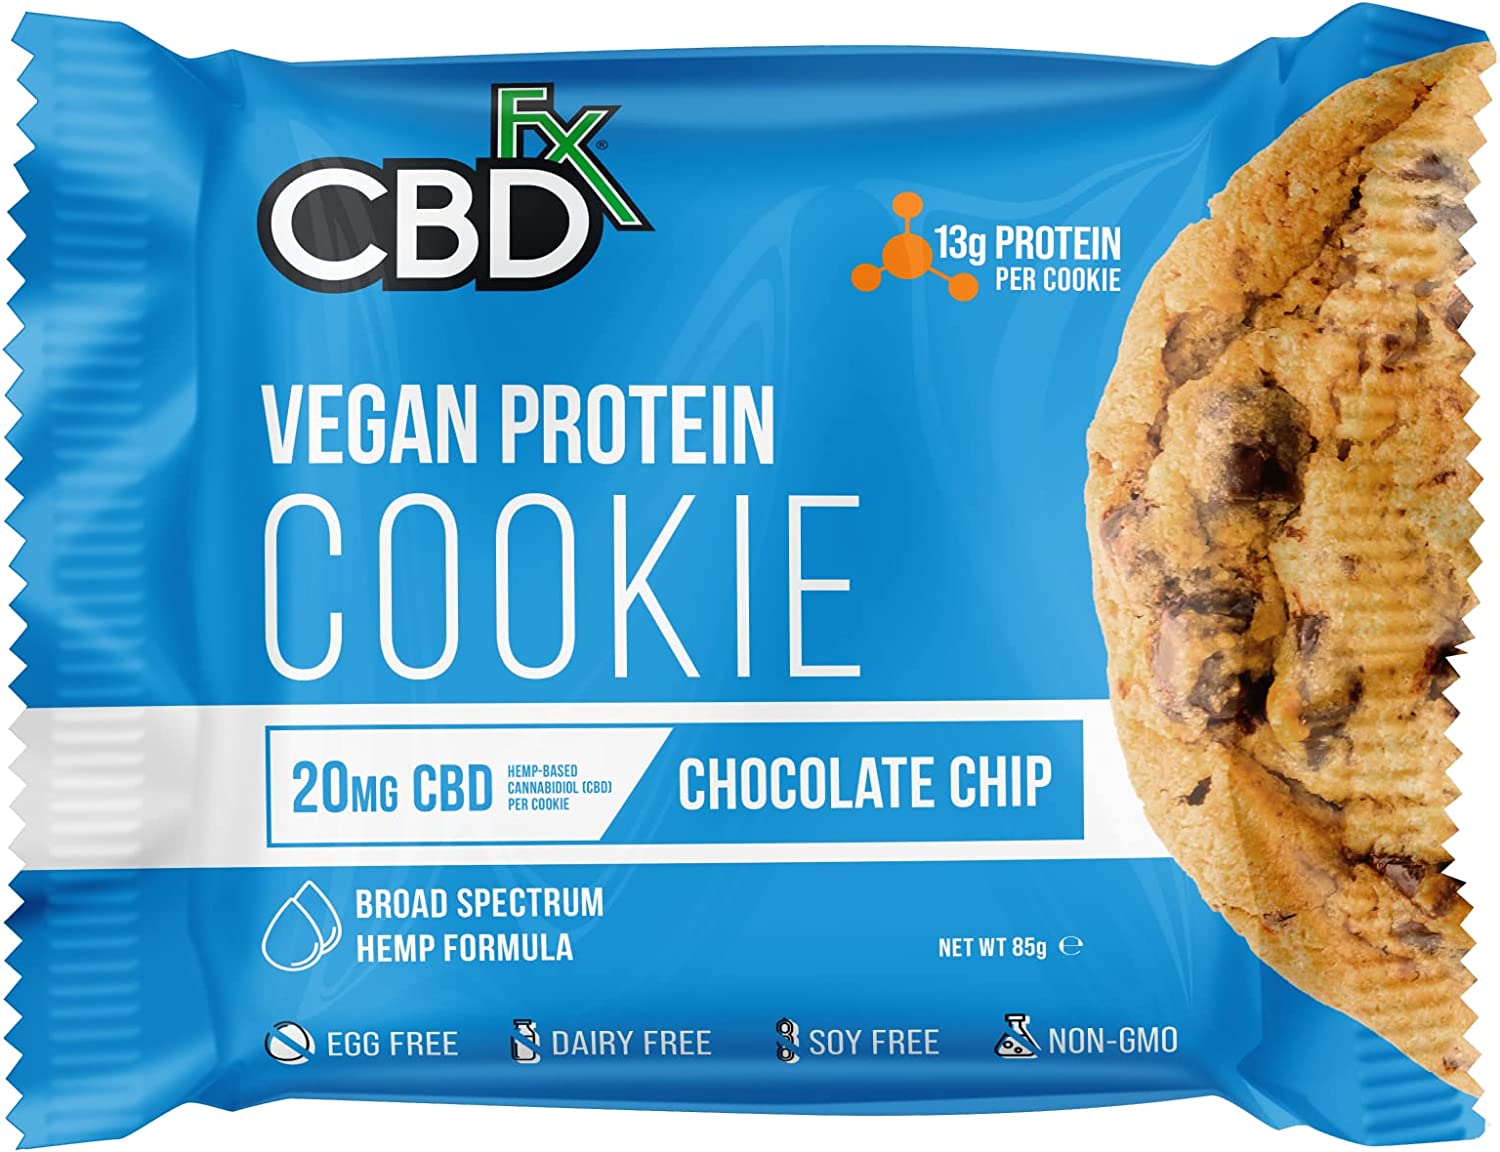 CBDFX CBD EDIBLES - Vegan Protein Chocolate Chip CBD Cookie 20MG Best Price